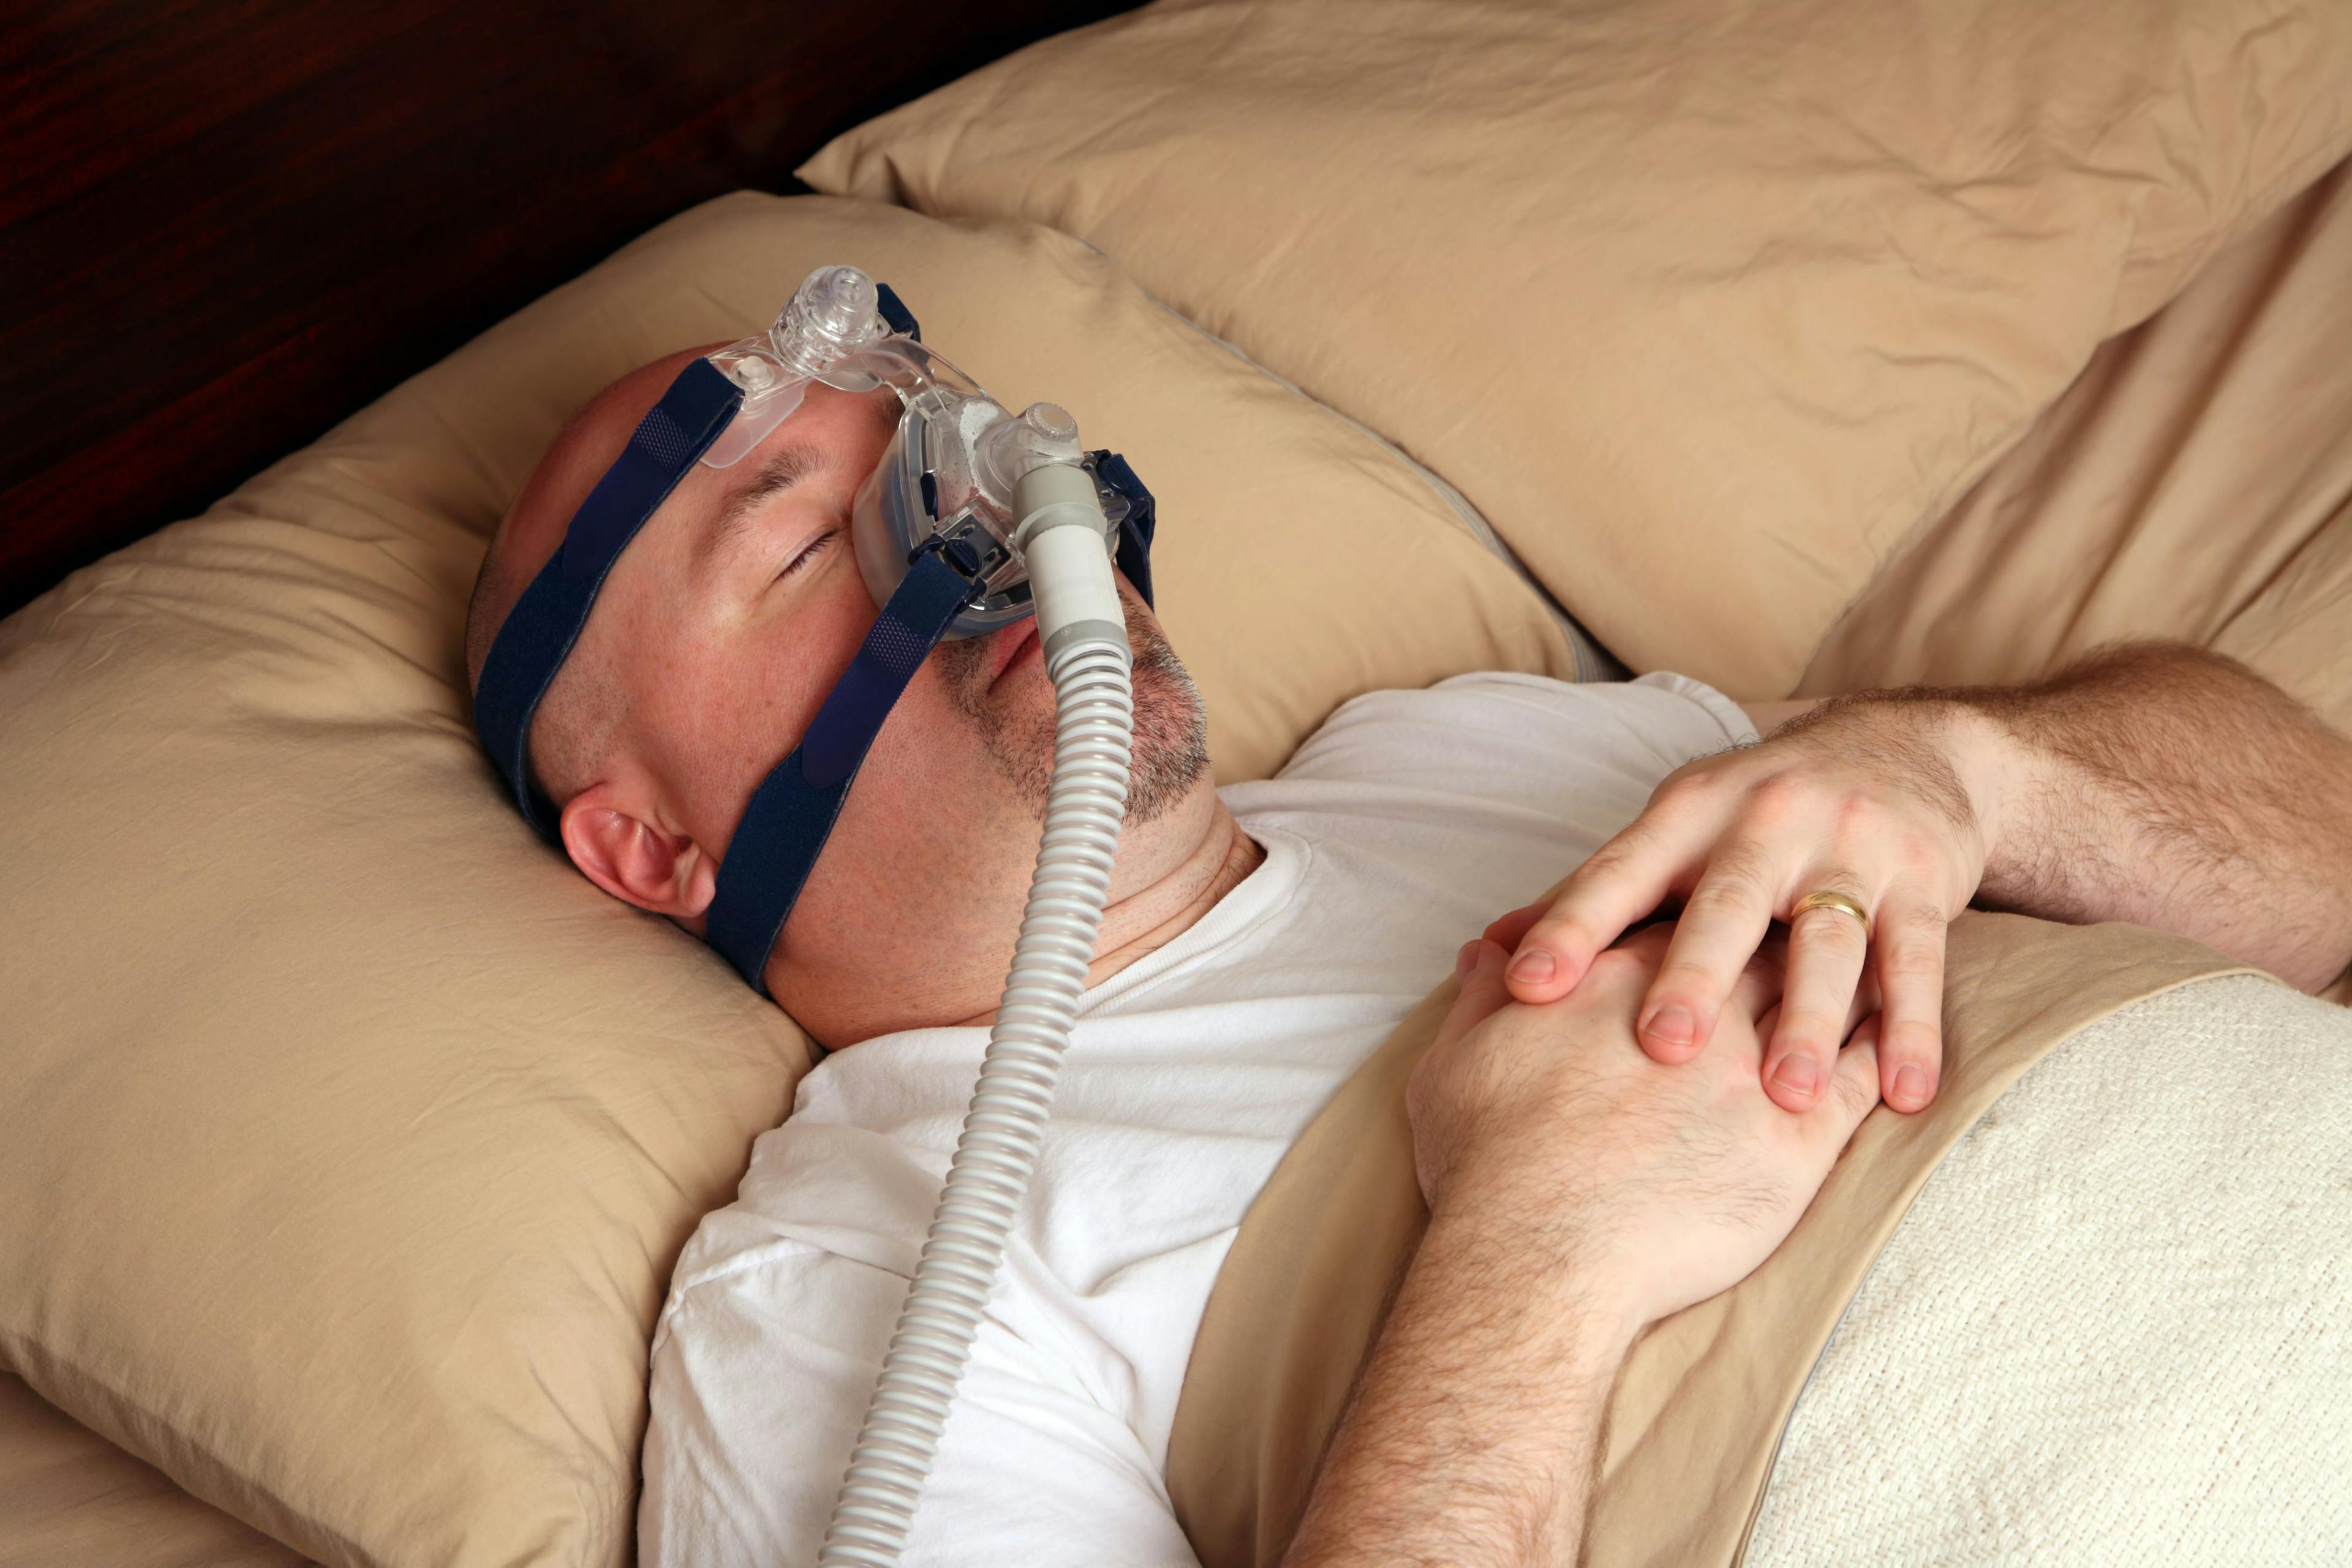  Man with sleep apnea using a CPAP machine in bed. Credit: auremar - stock.adobe.com